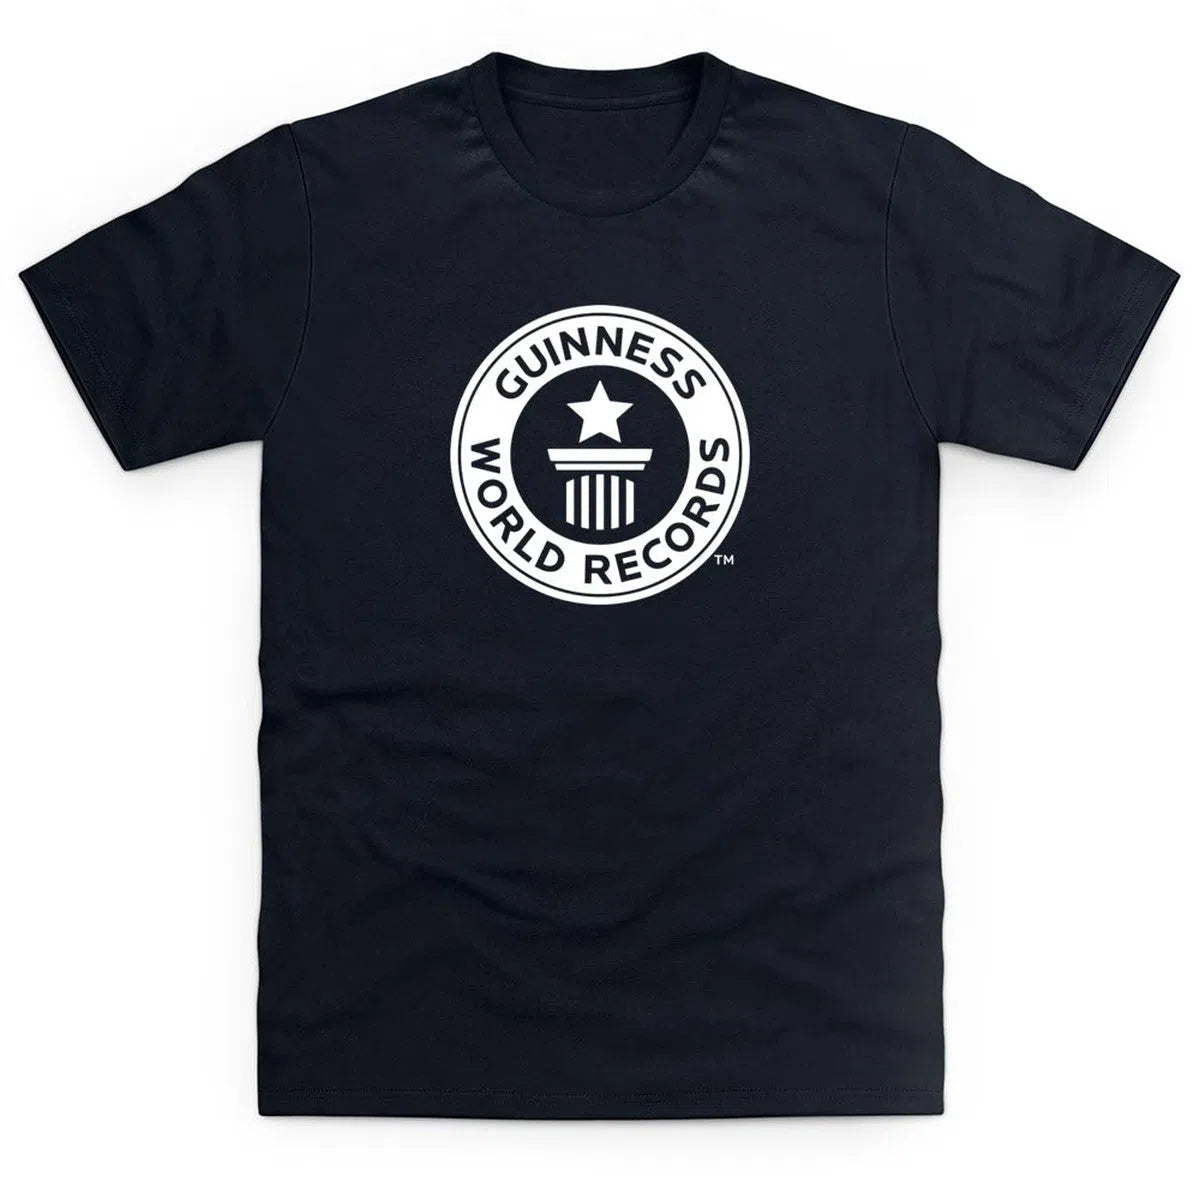 Men's T-shirt with white logo-Guinness World Records